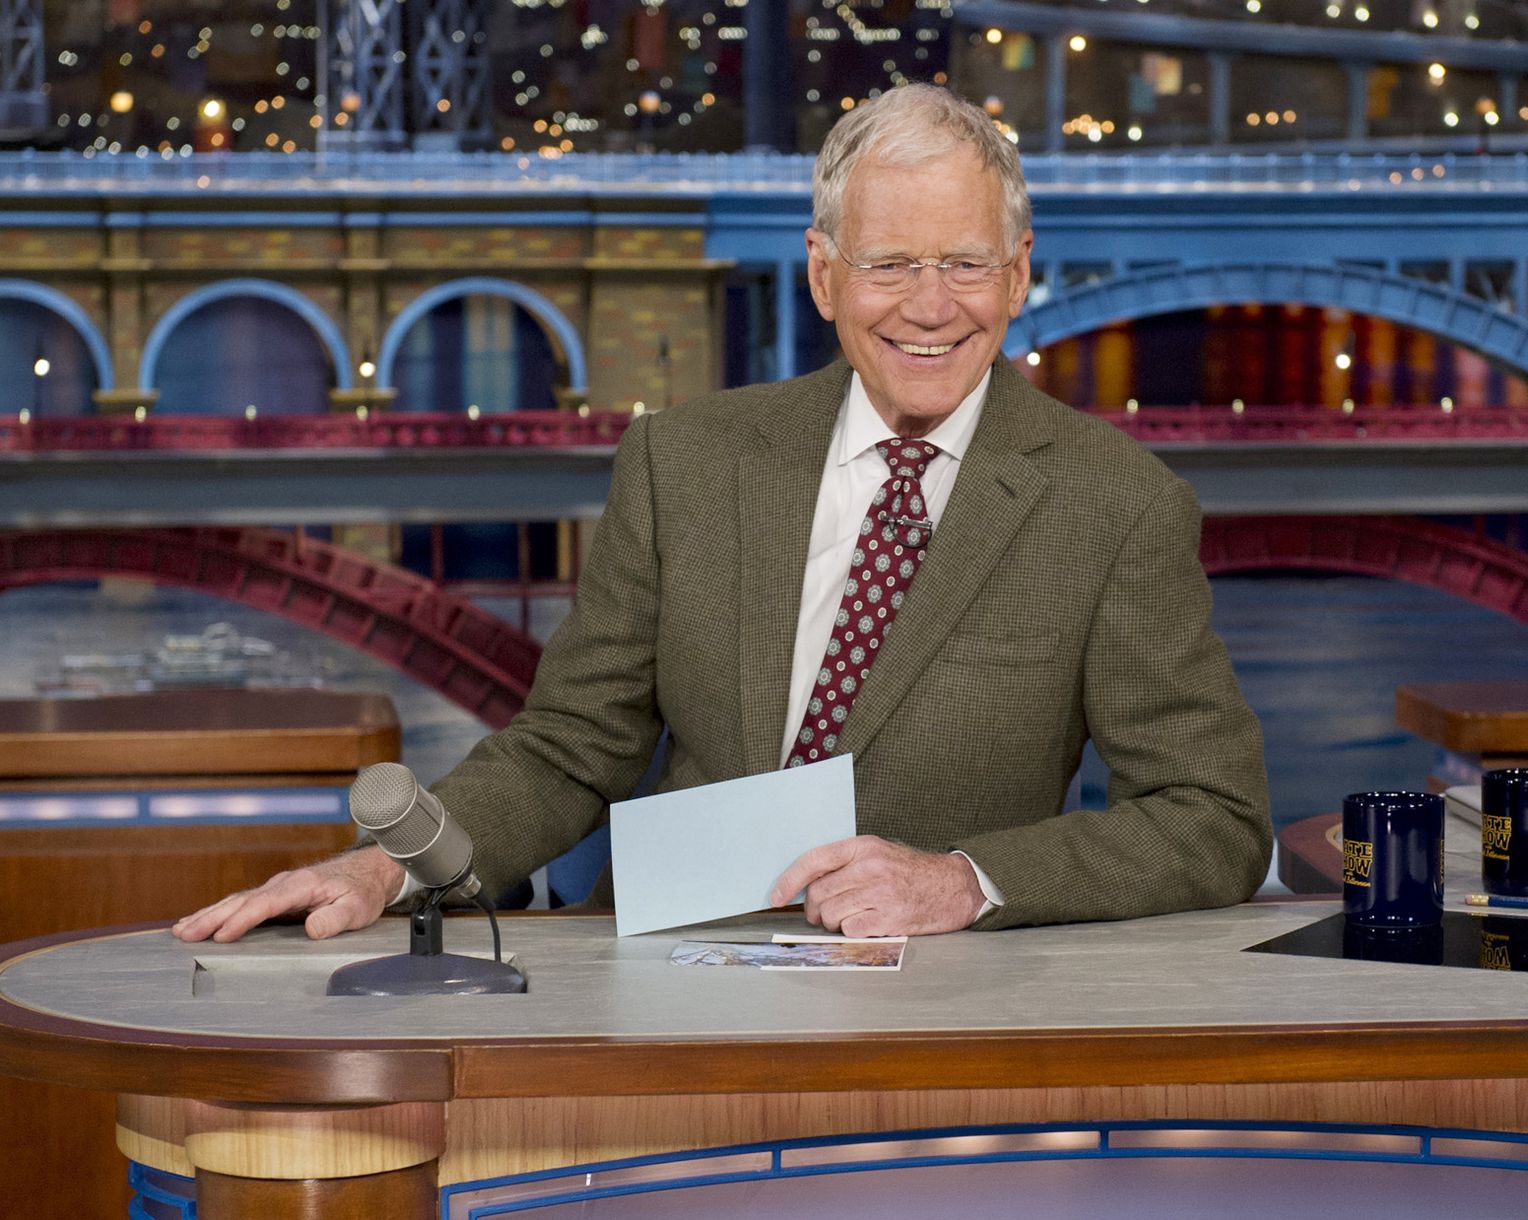 Happy Birthday dear David Letterman! 